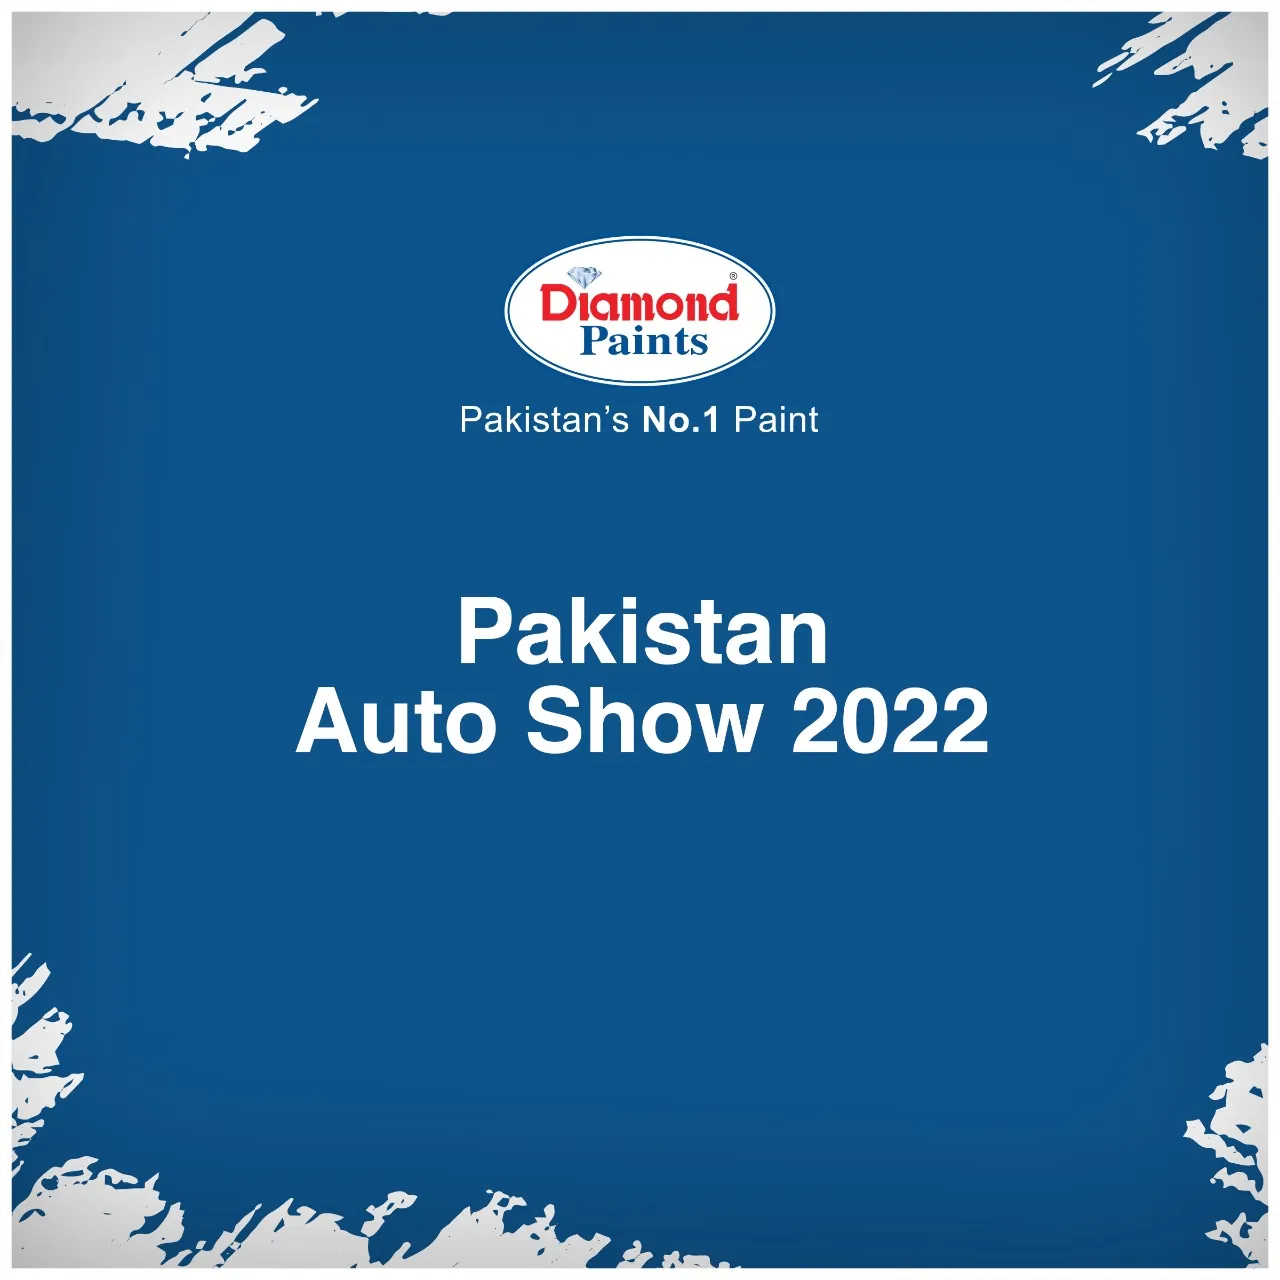 Diamond Paints at Pakistan Auto Show 2022